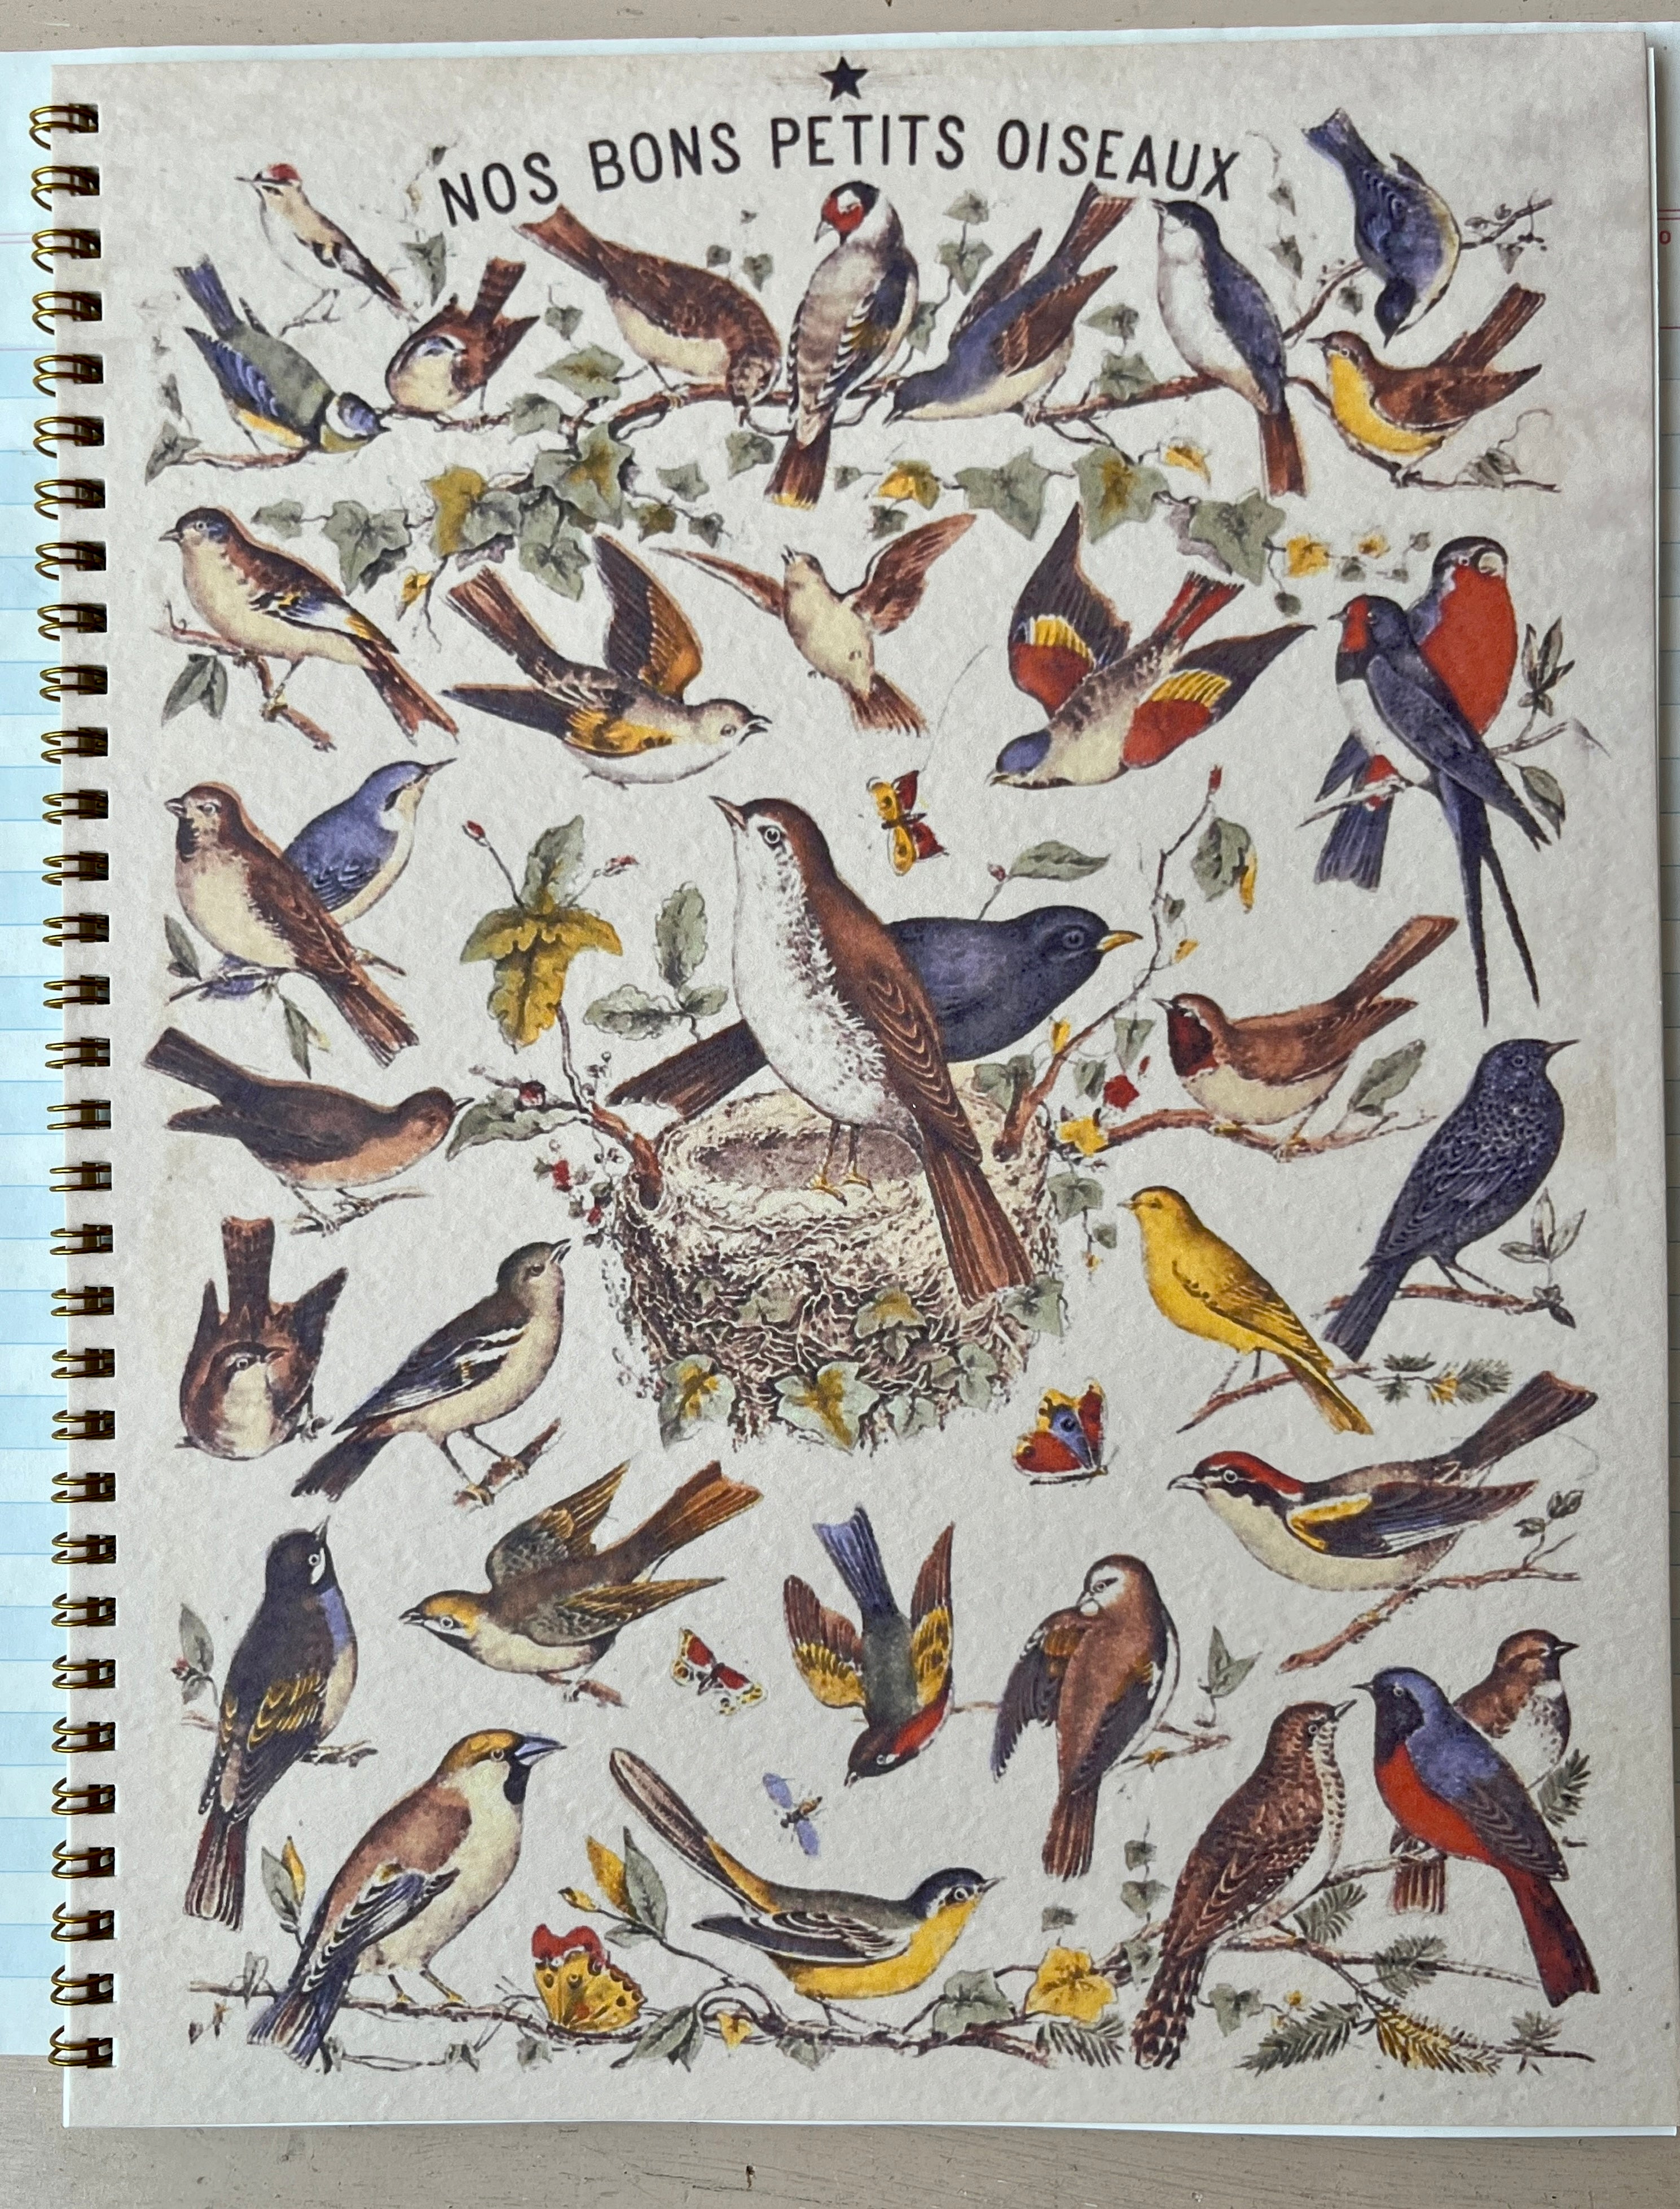 Petit Oiseaux Notebook